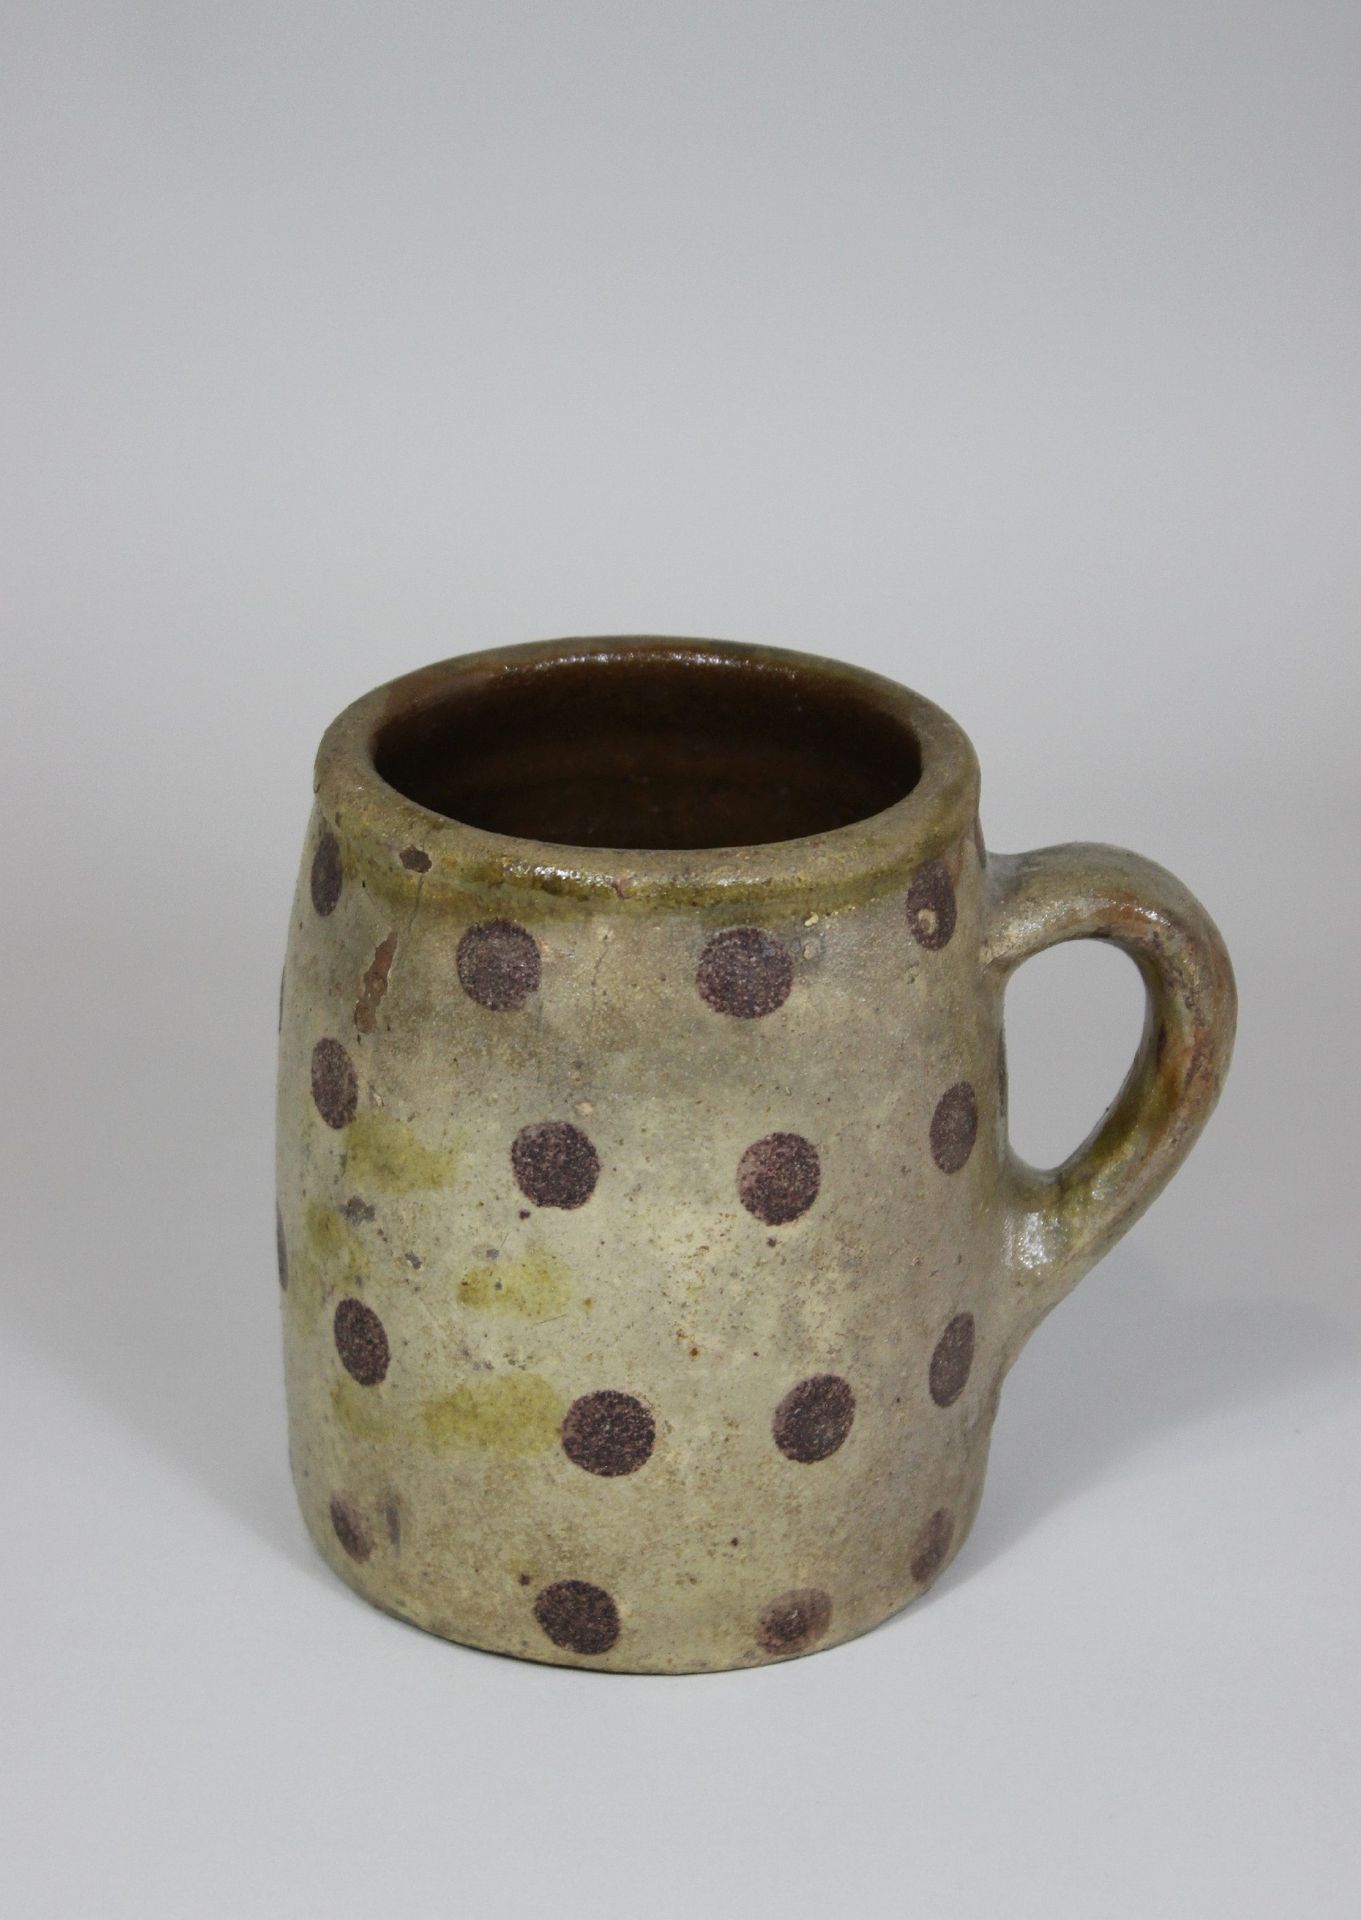 Keramikkrug, Österreich 19. Jh. Jarra de cerámica, Austria, siglo XIX, punteada.&hellip;